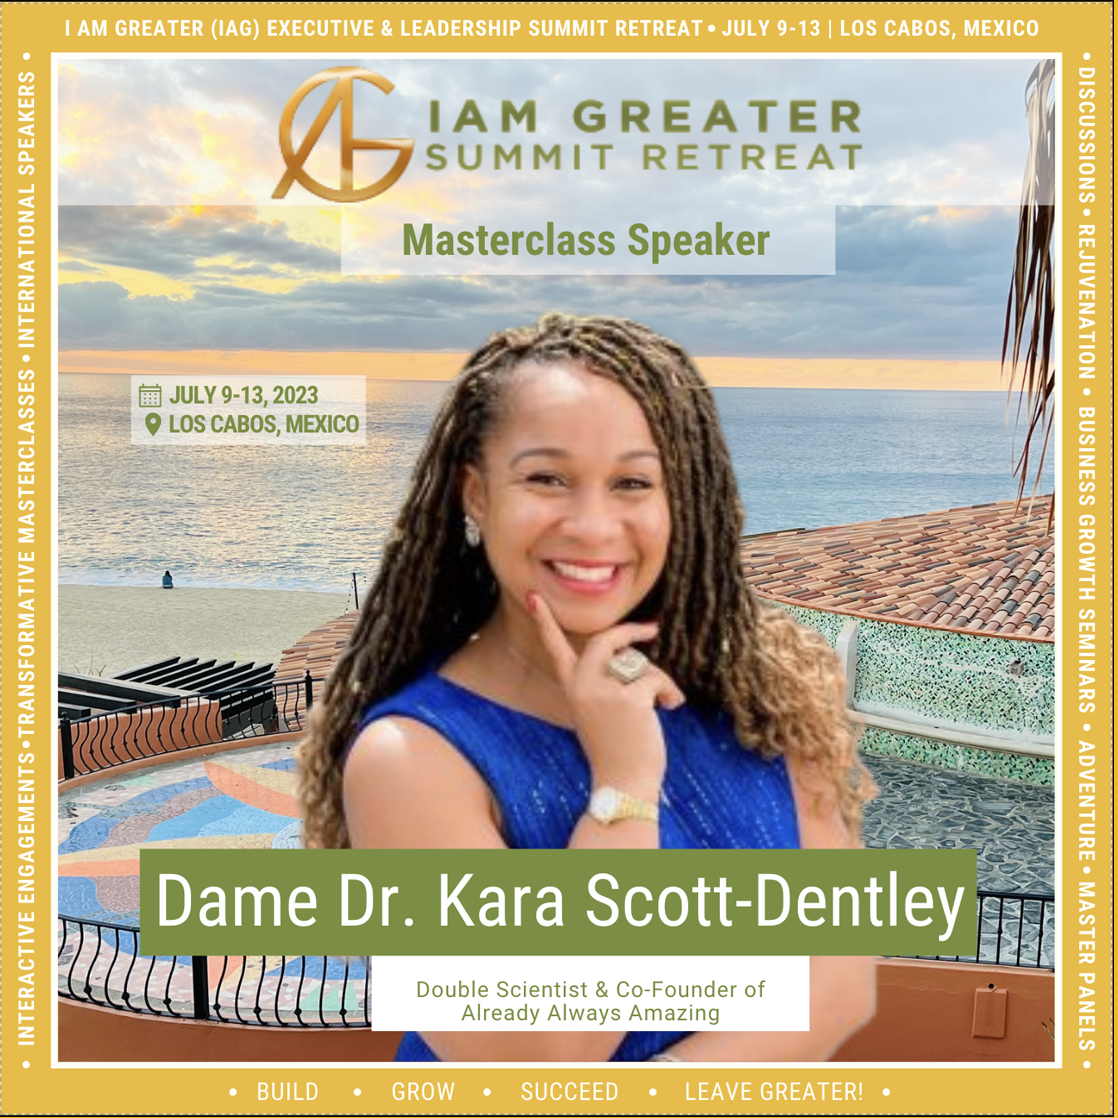 Renowned Scientist turned Entrepreneur, Author and Philanthropist Dame Dr. Kara Scott-Dentley to Speak at I Am Greater Summit Retreat